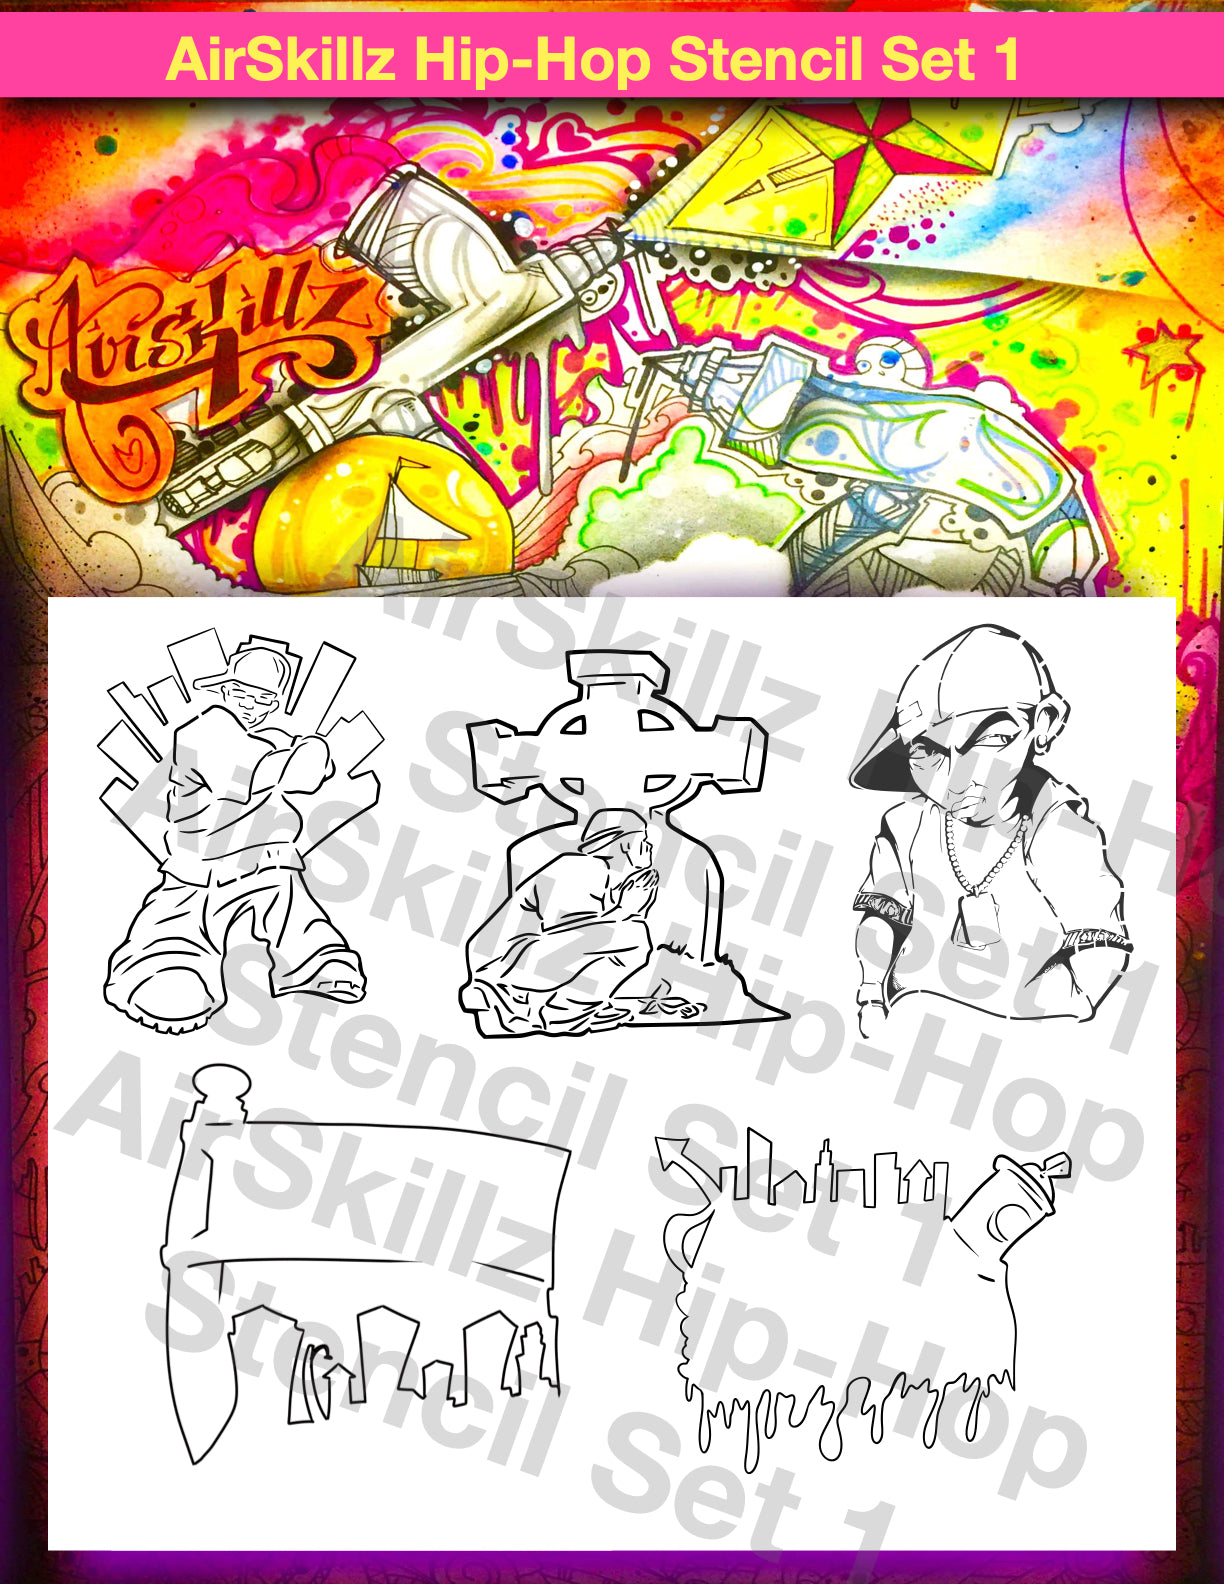 AirSkillz Hip-Hop 5 Piece Stencil Set